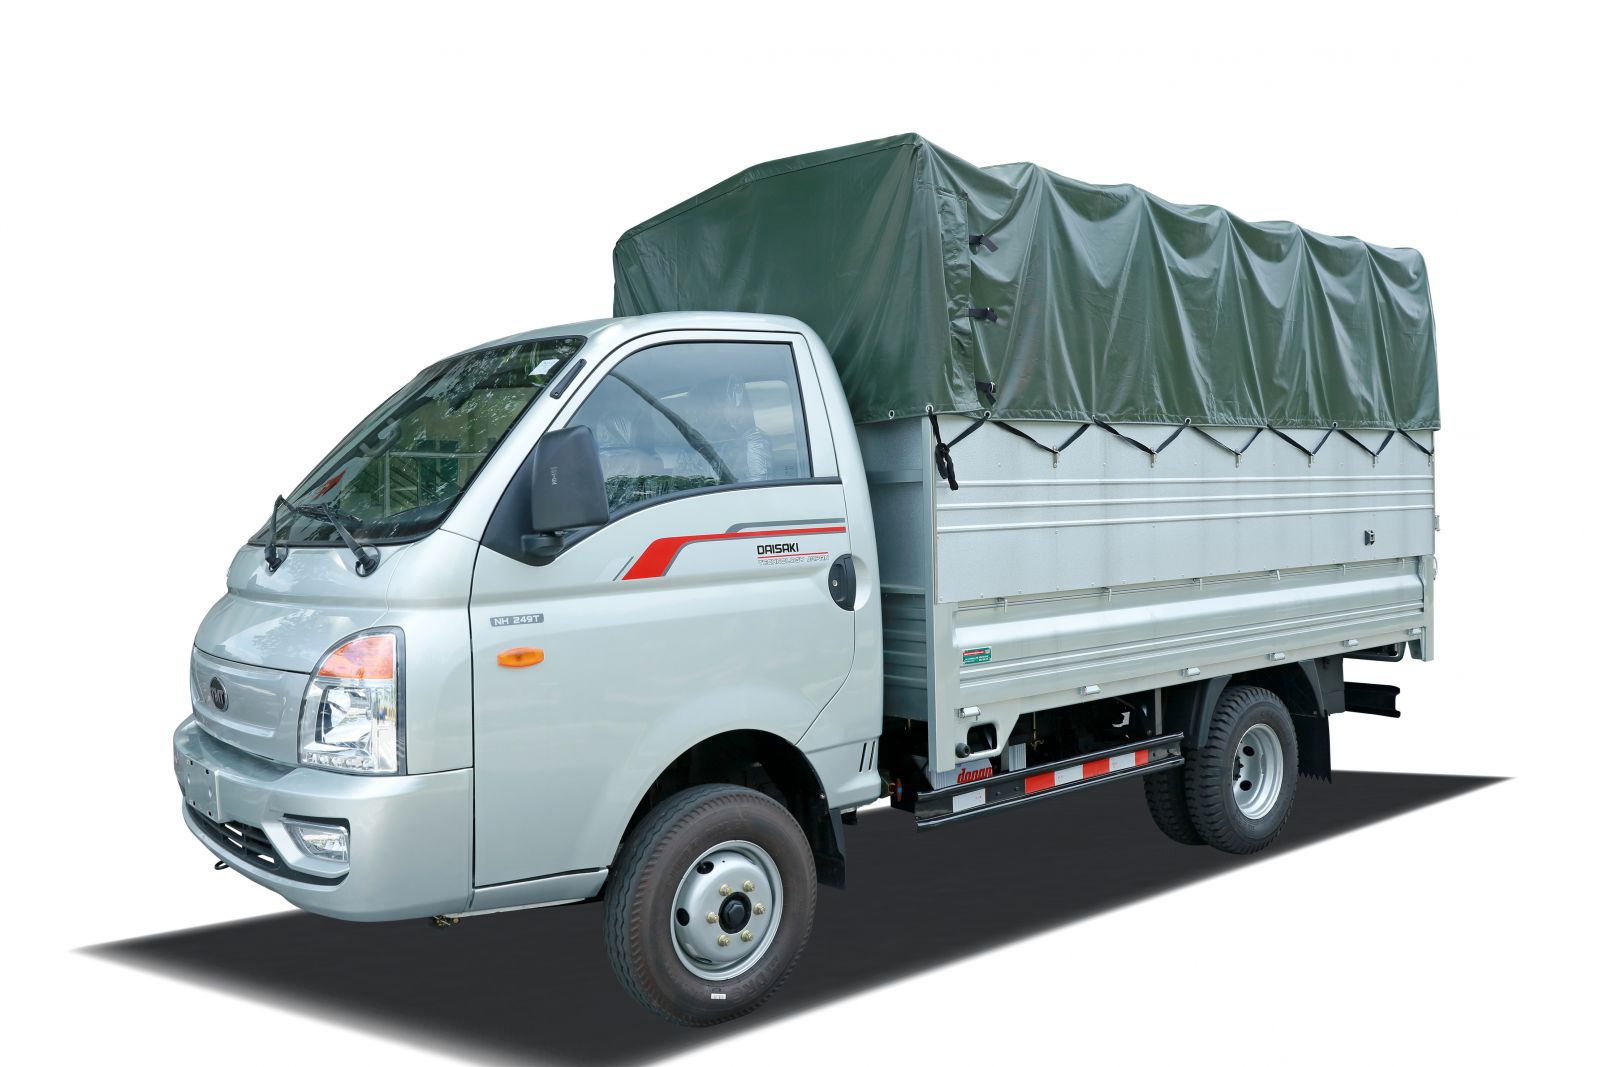 Bảng giá xe tải thùng TMT Daisaki